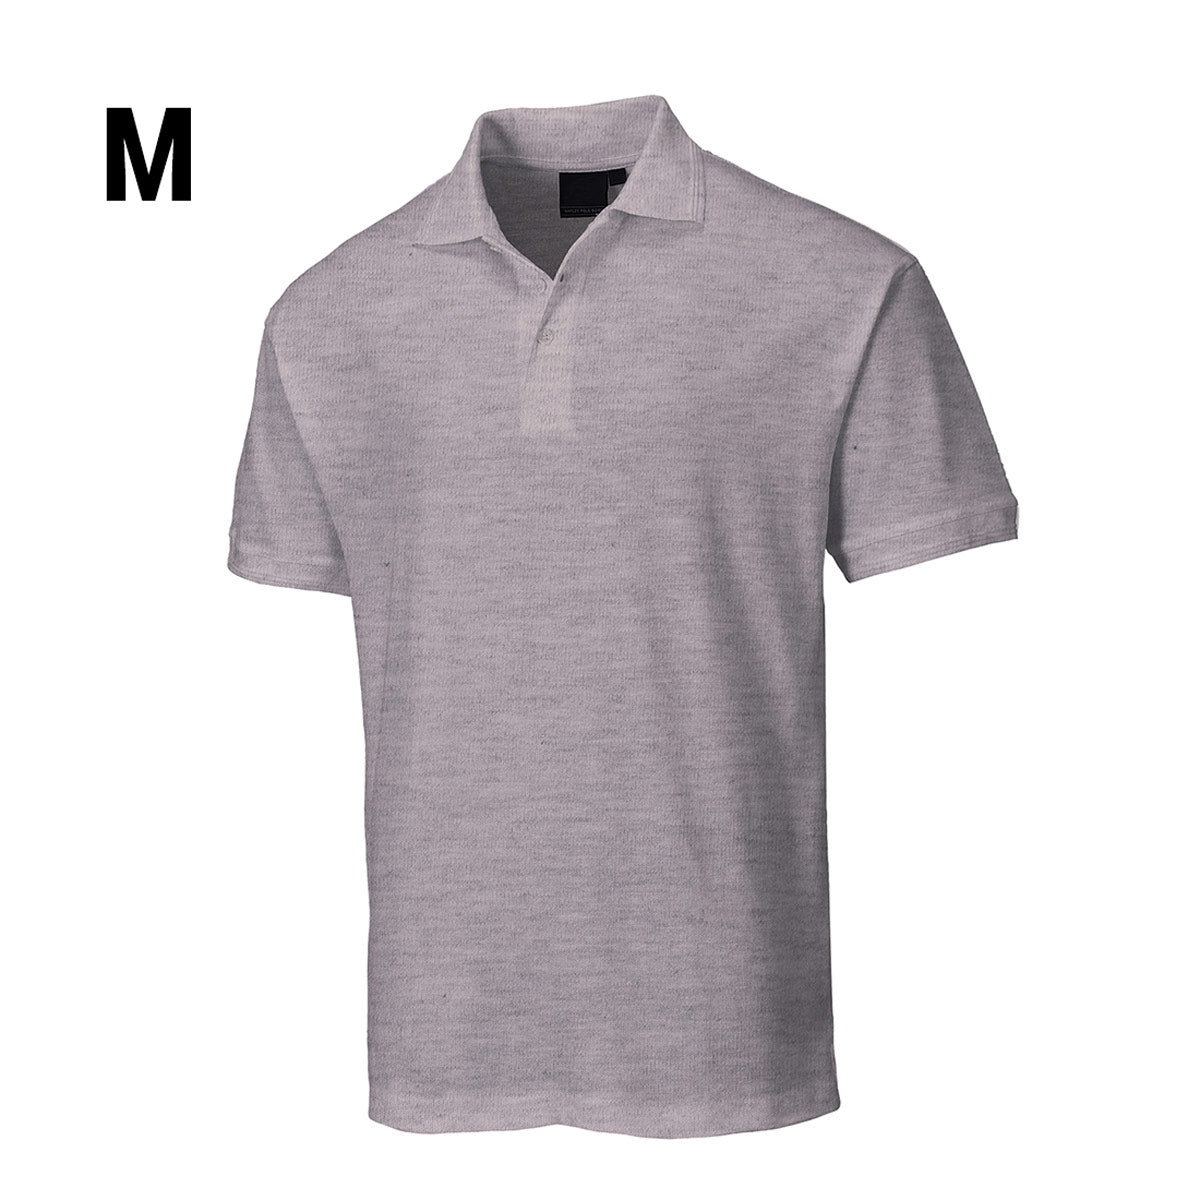 Polo shirt til mænd - Grå - Størrelse: M